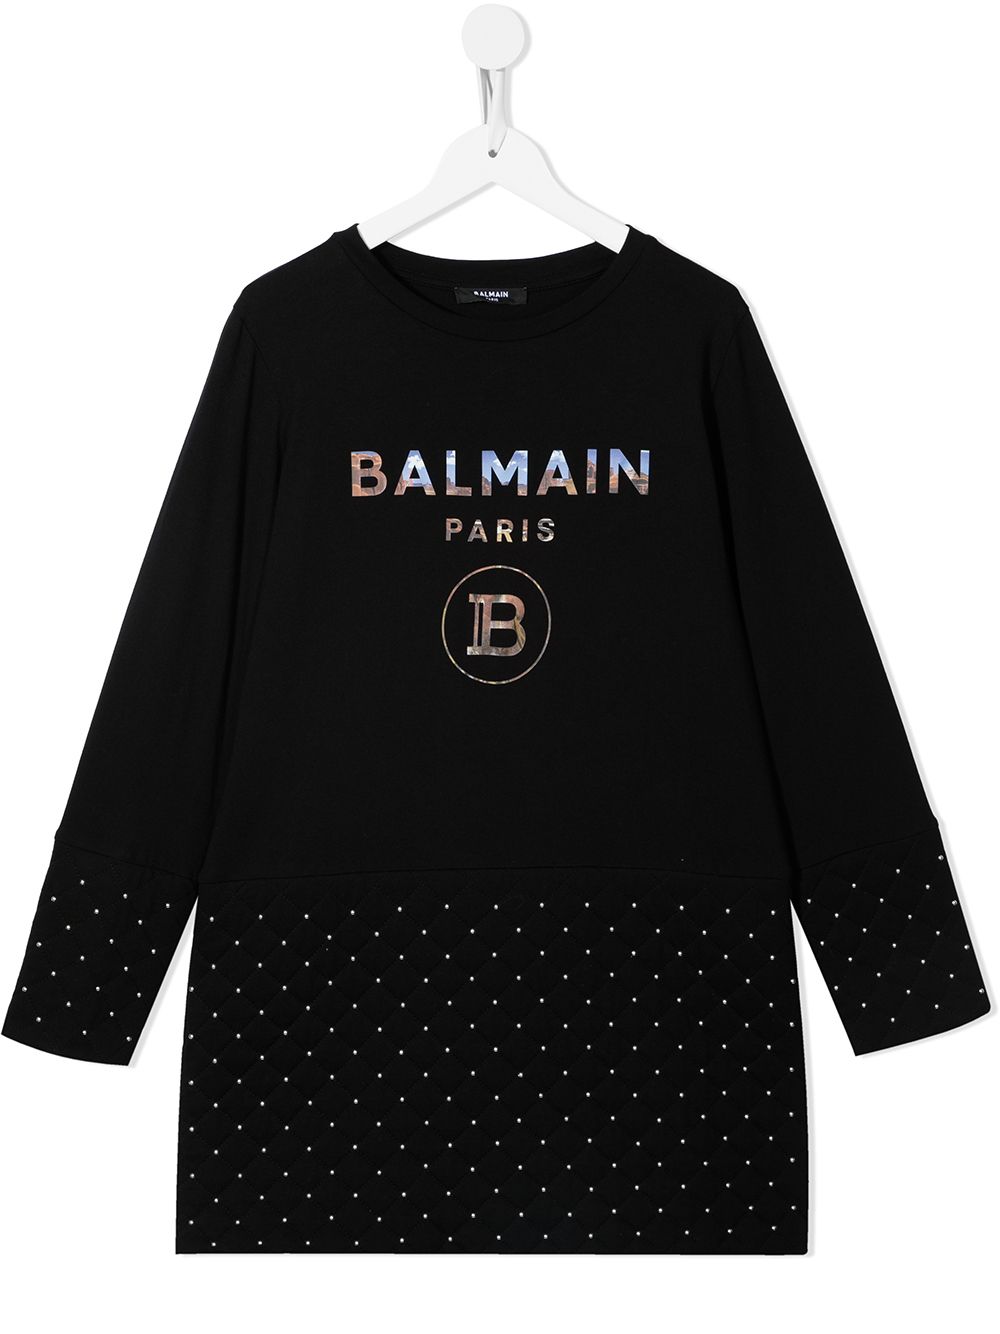 BALMAIN KIDS logo print studded dress black - MAISONDEFASHION.COM